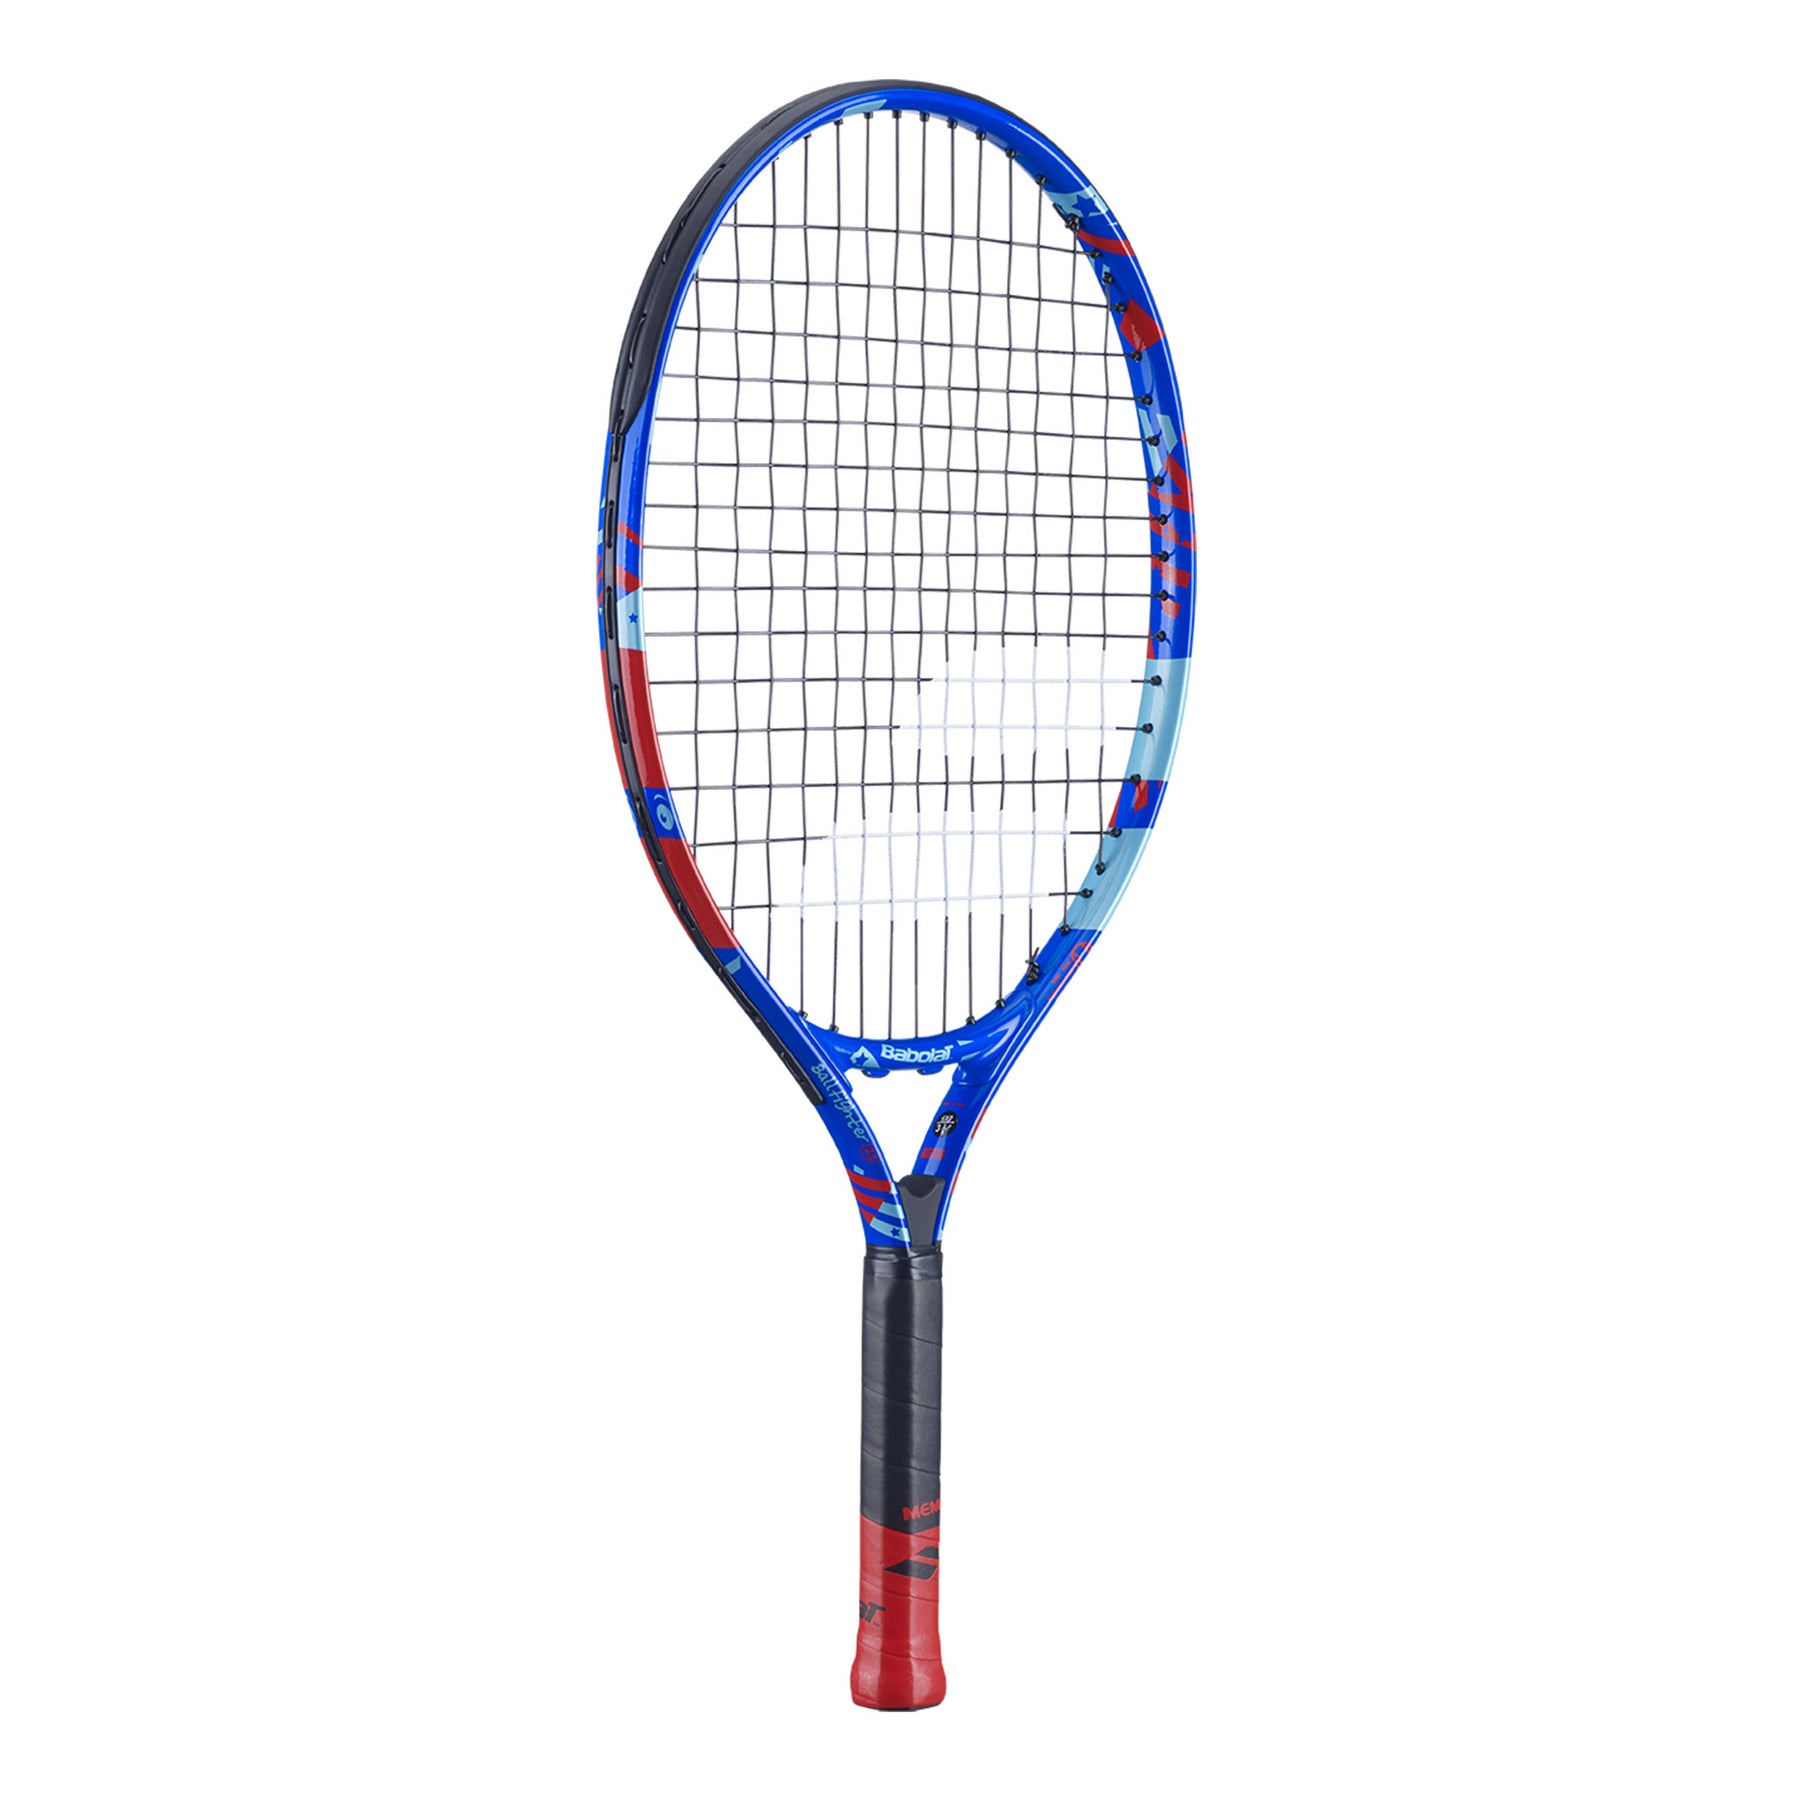 Babolat Ballfighter 21 Tennis Racket